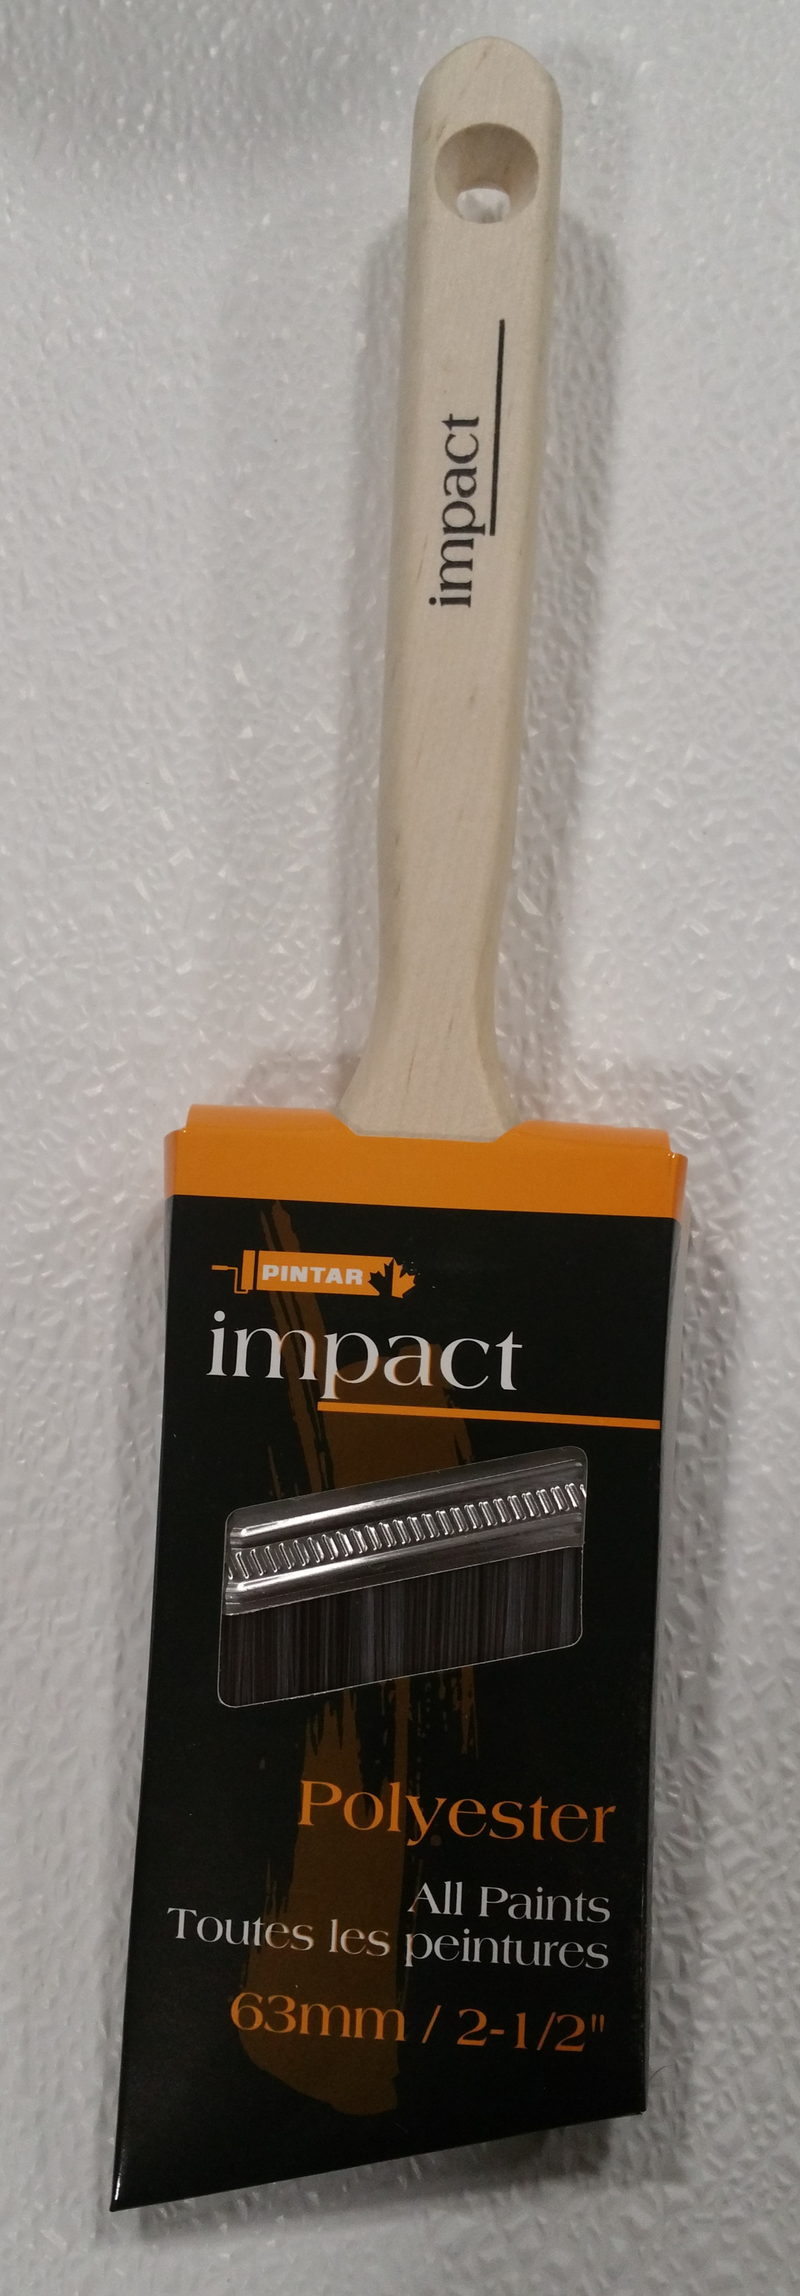 Pintar Impact Brushes - Assorted Size